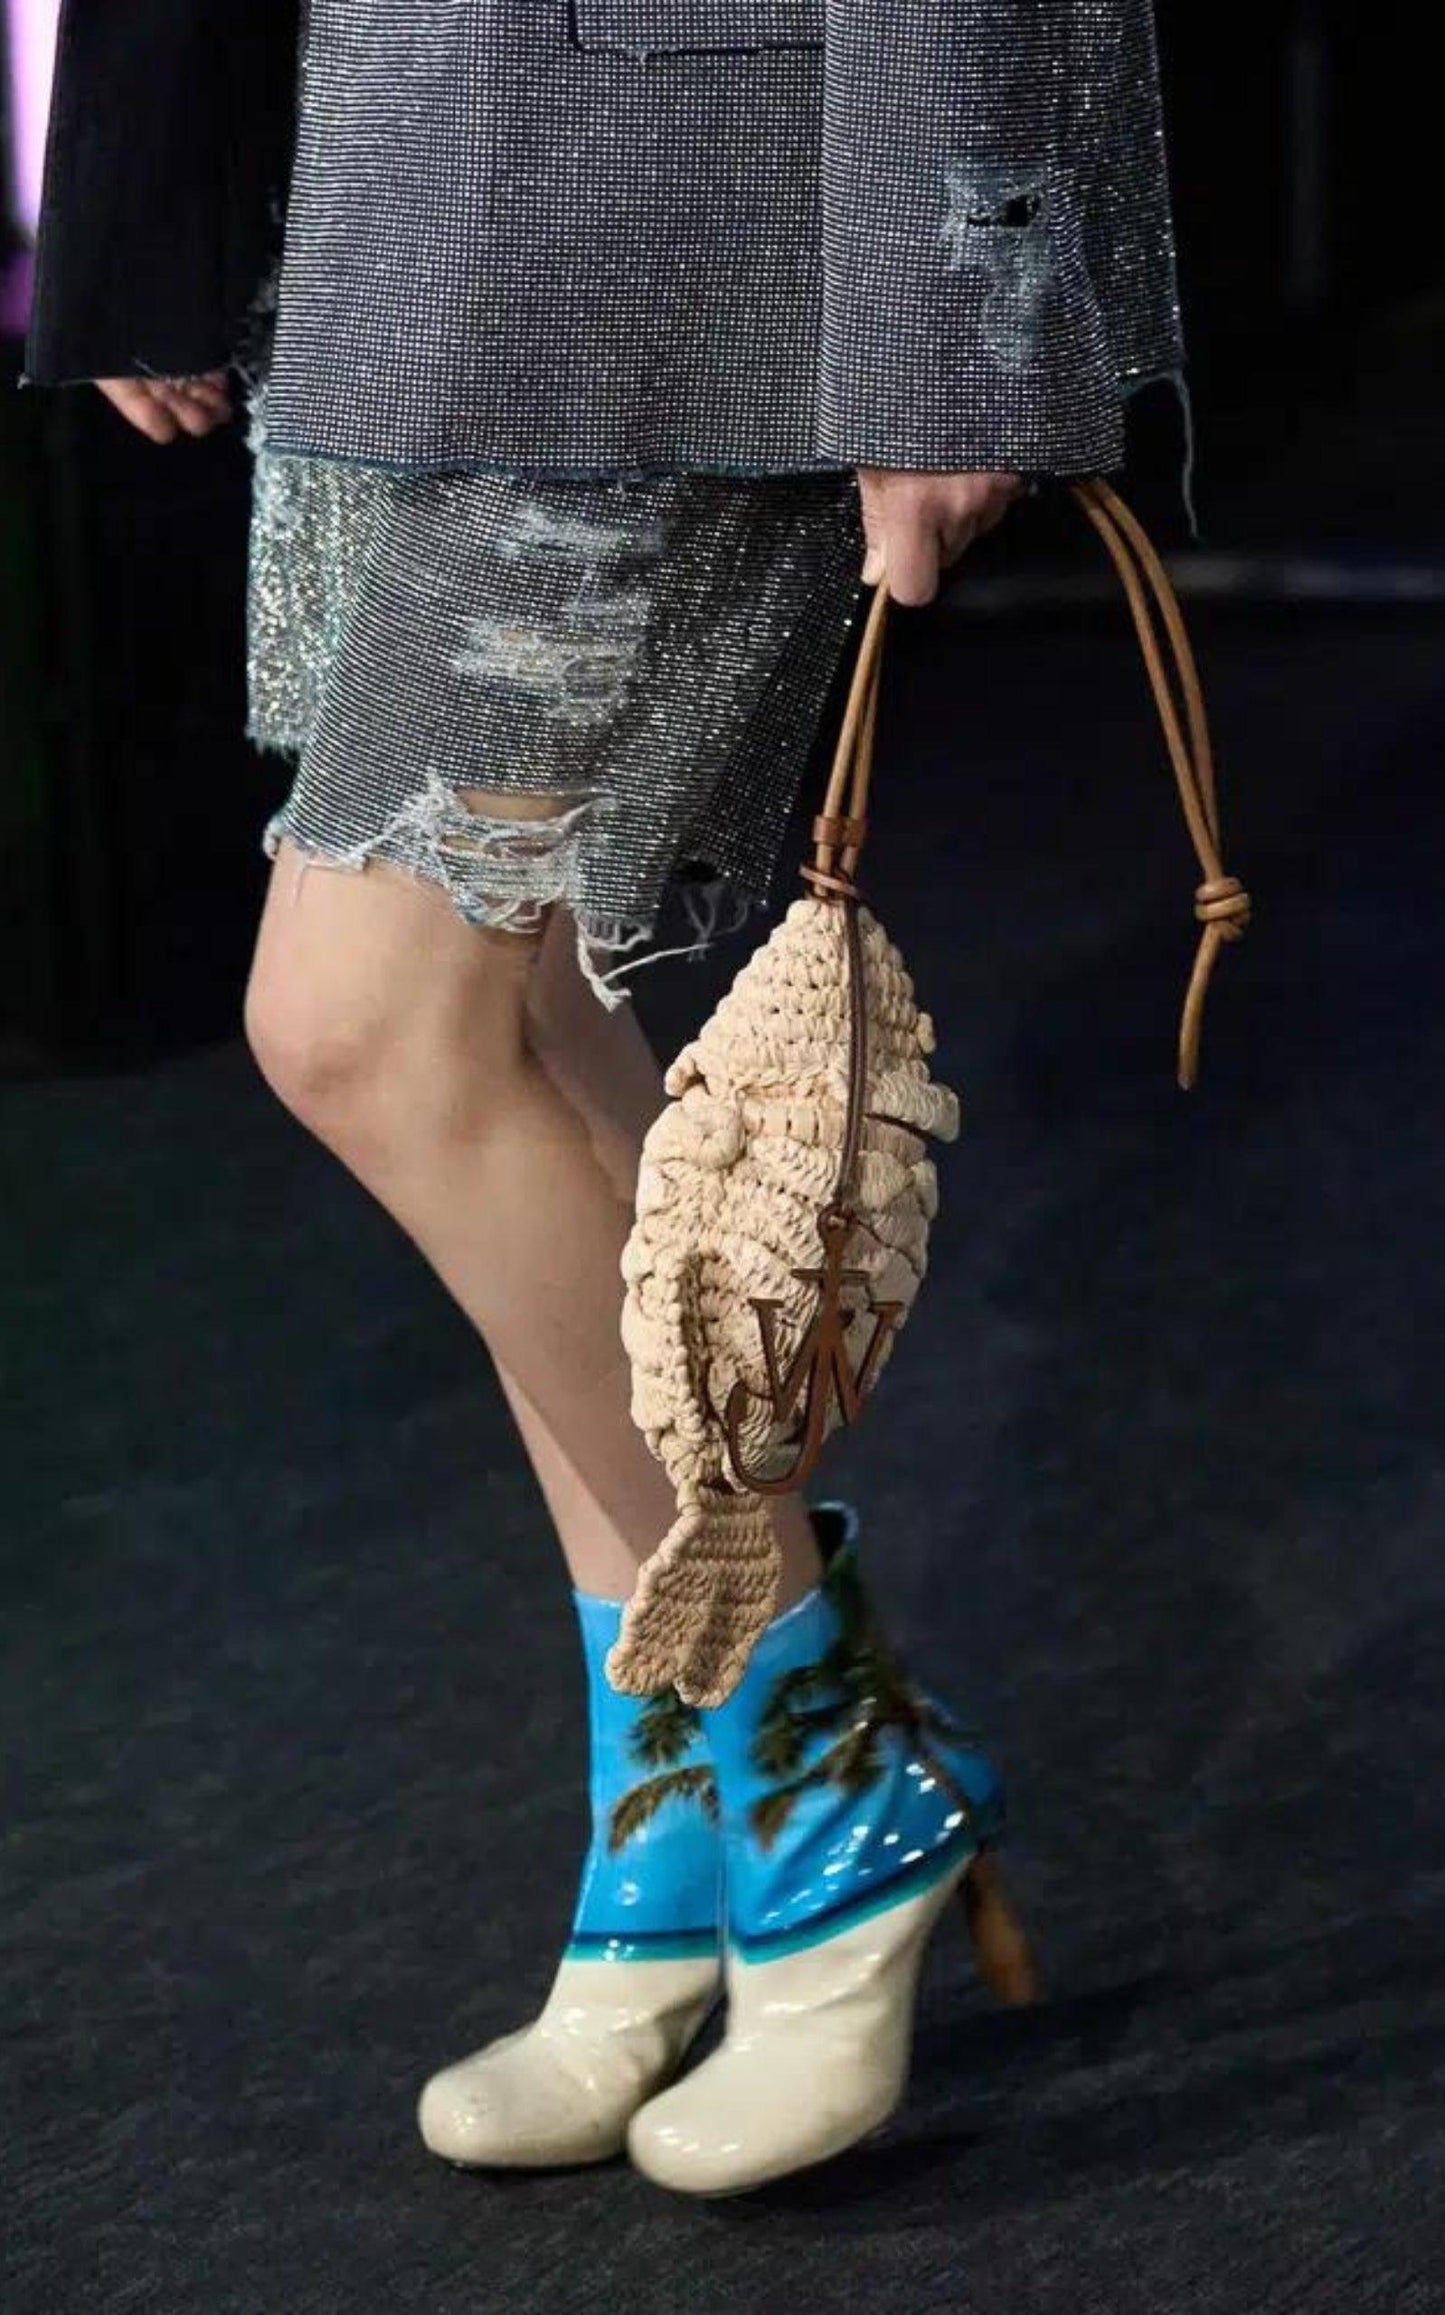 The Fish Crocheted Shoulder Bag